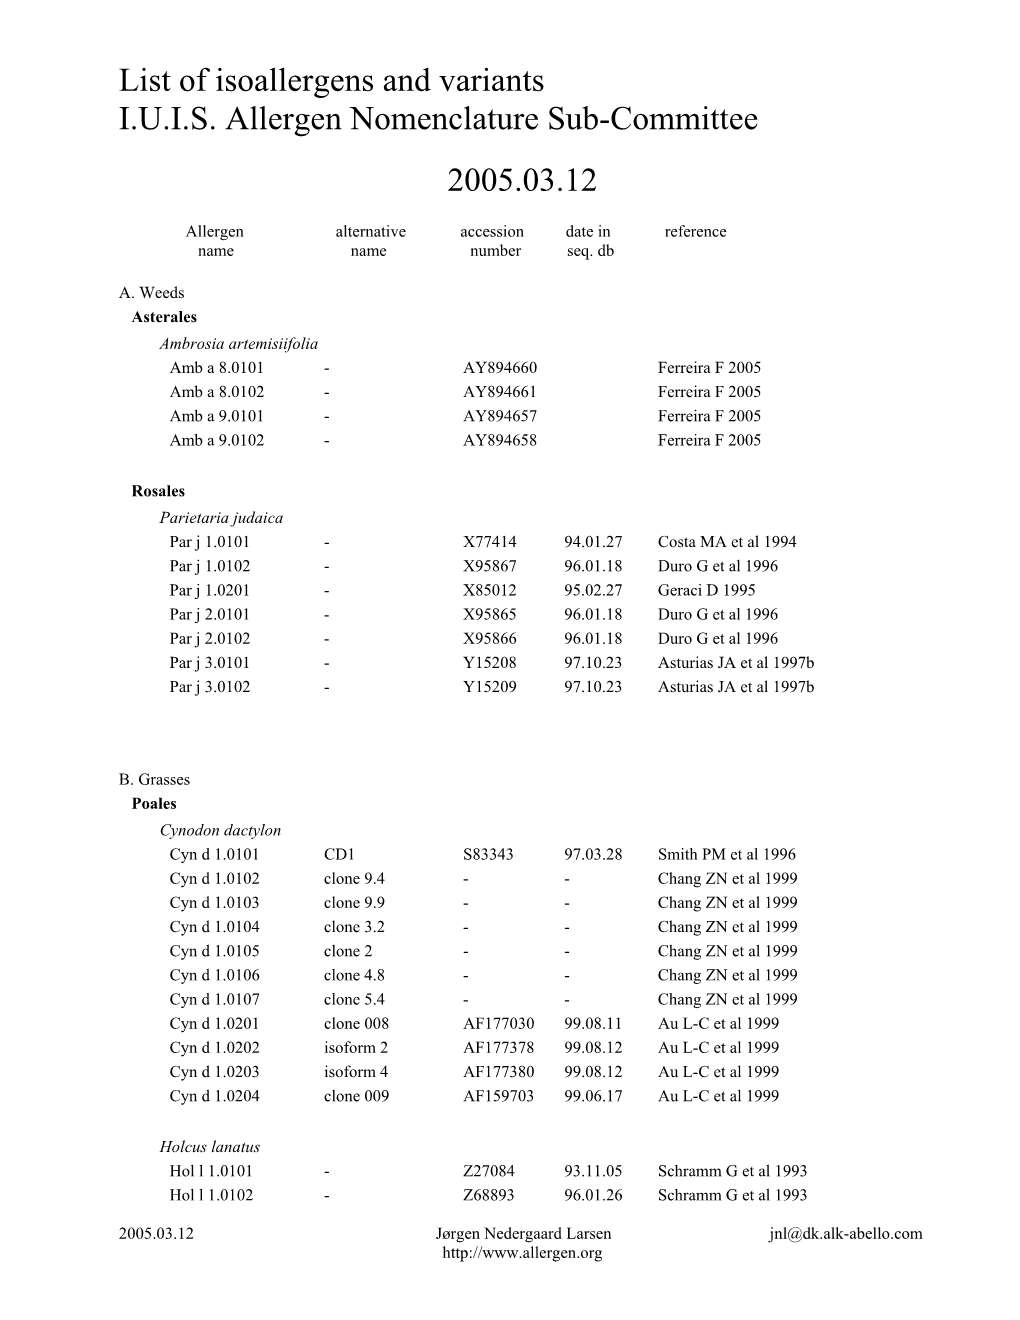 List of Isoallergens and Variants I.U.I.S. Allergen Nomenclature Sub-Committee 2005.03.12